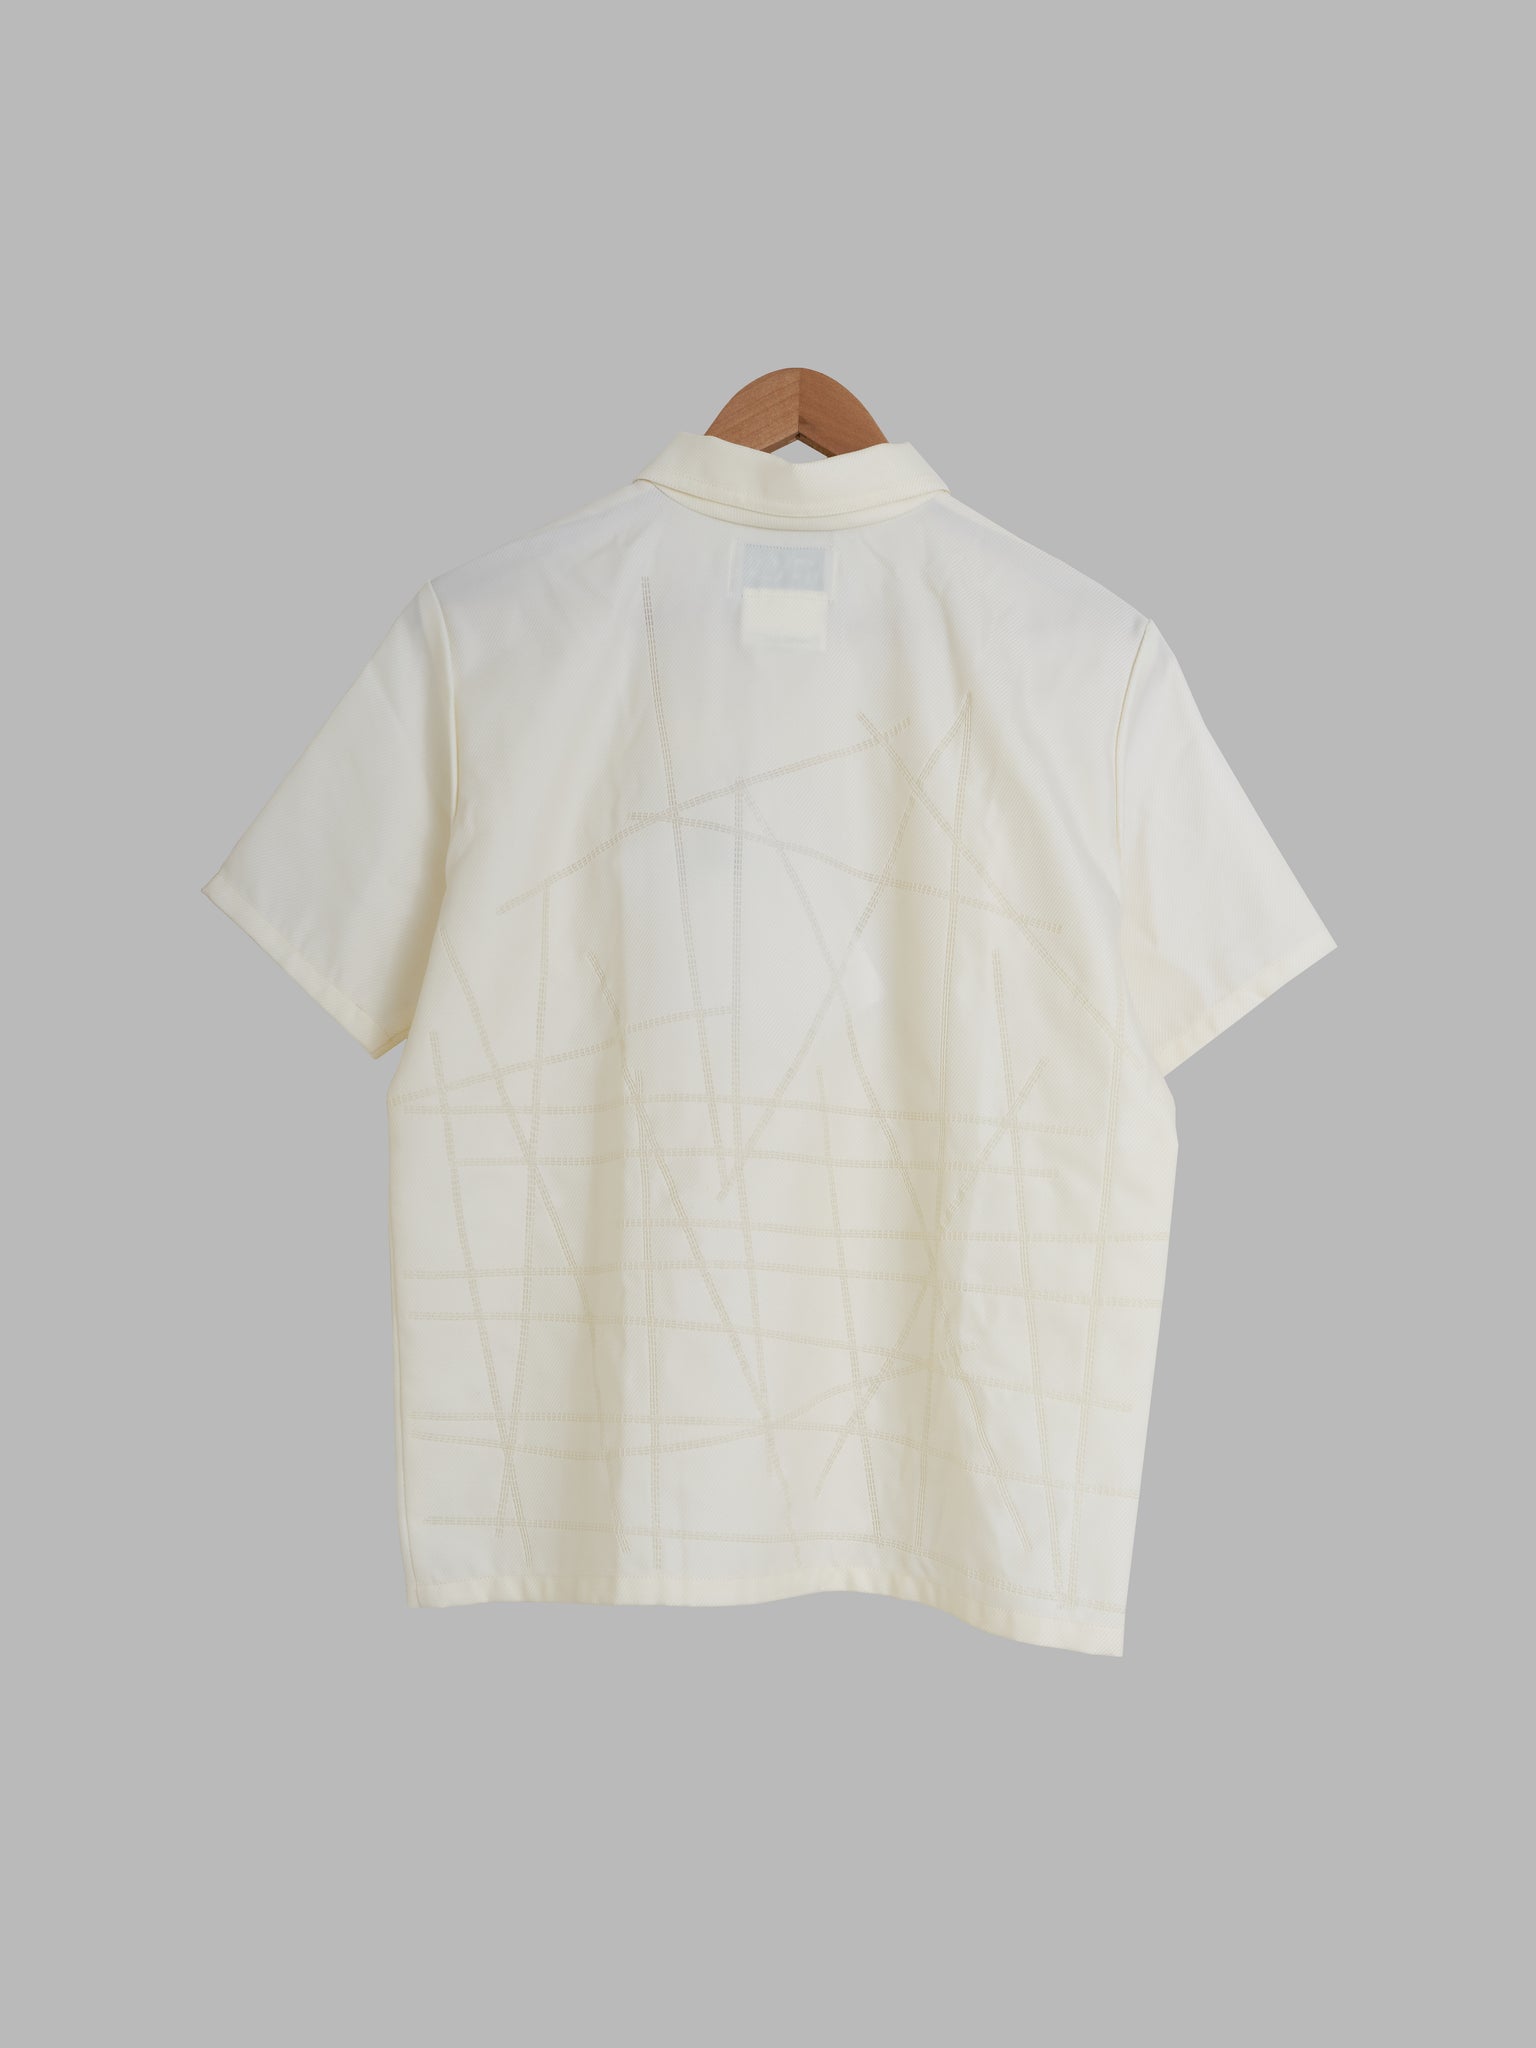 Yoshiki Hishinuma Homme white nylon “Techno Cut” short sleeve pullover shirt - S